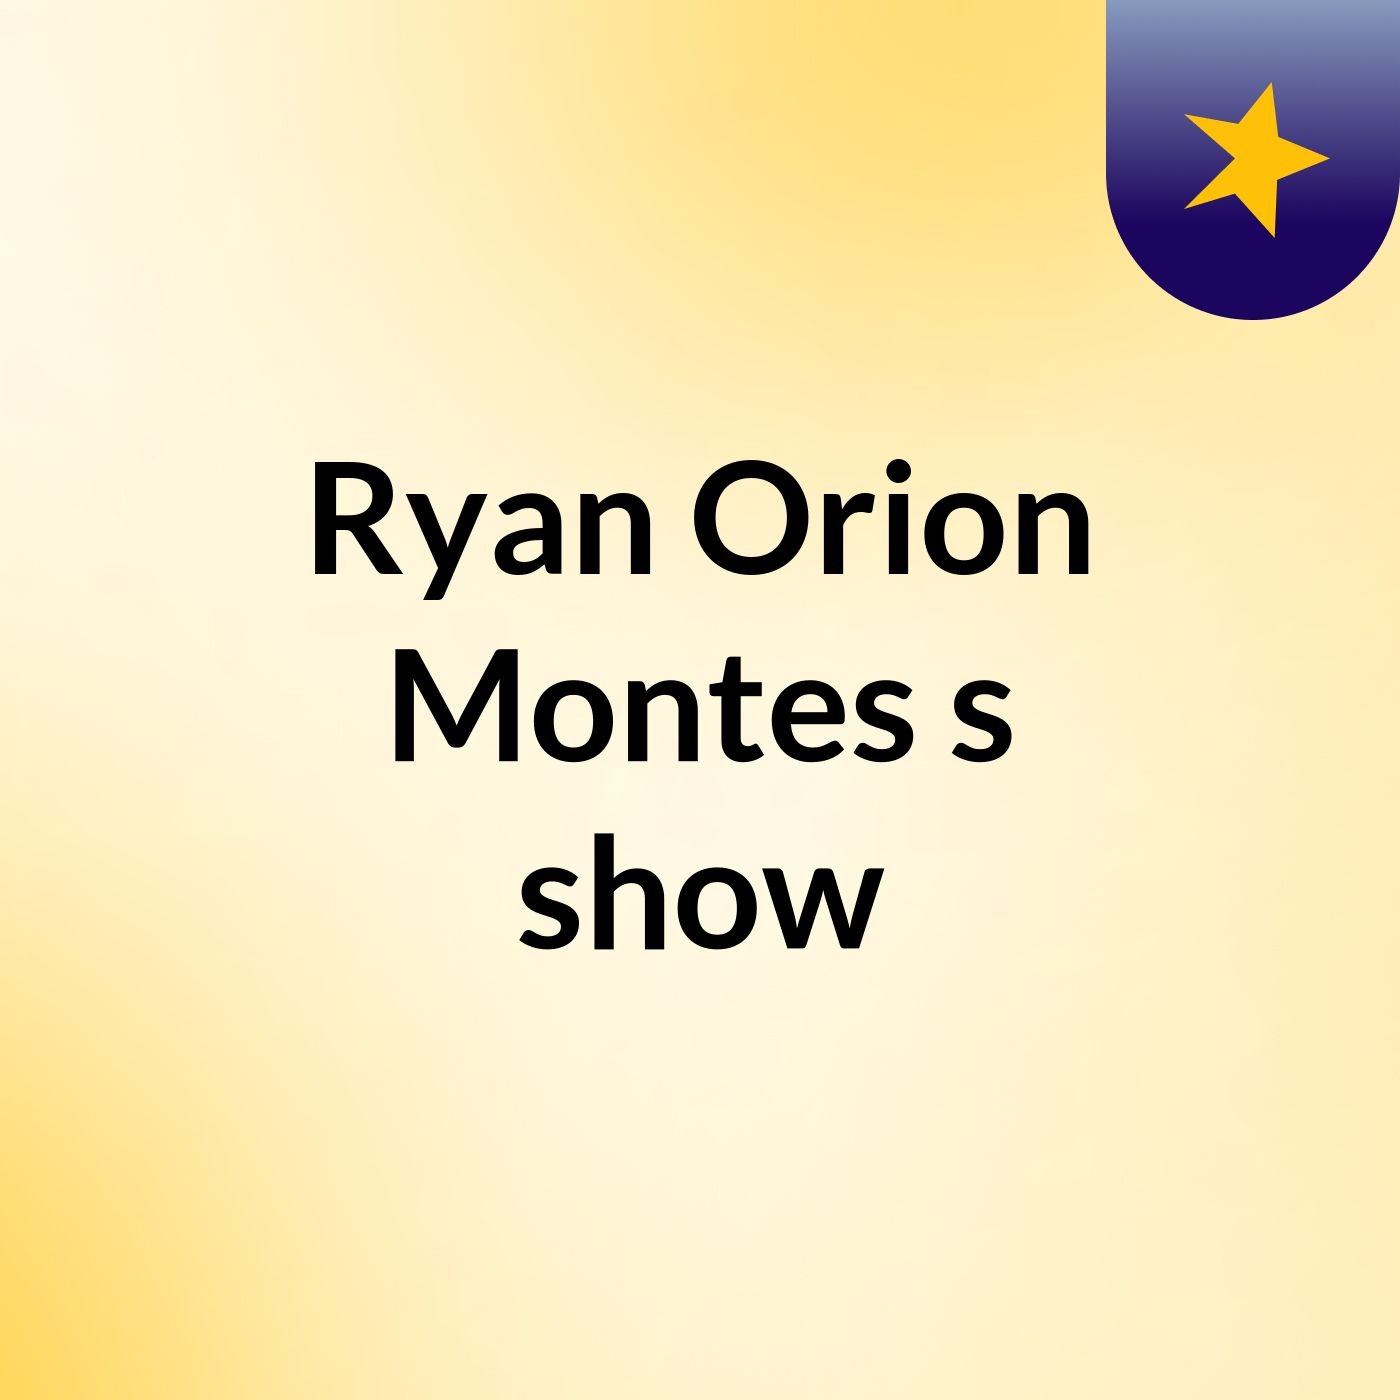 Ryan Orion Montes's show